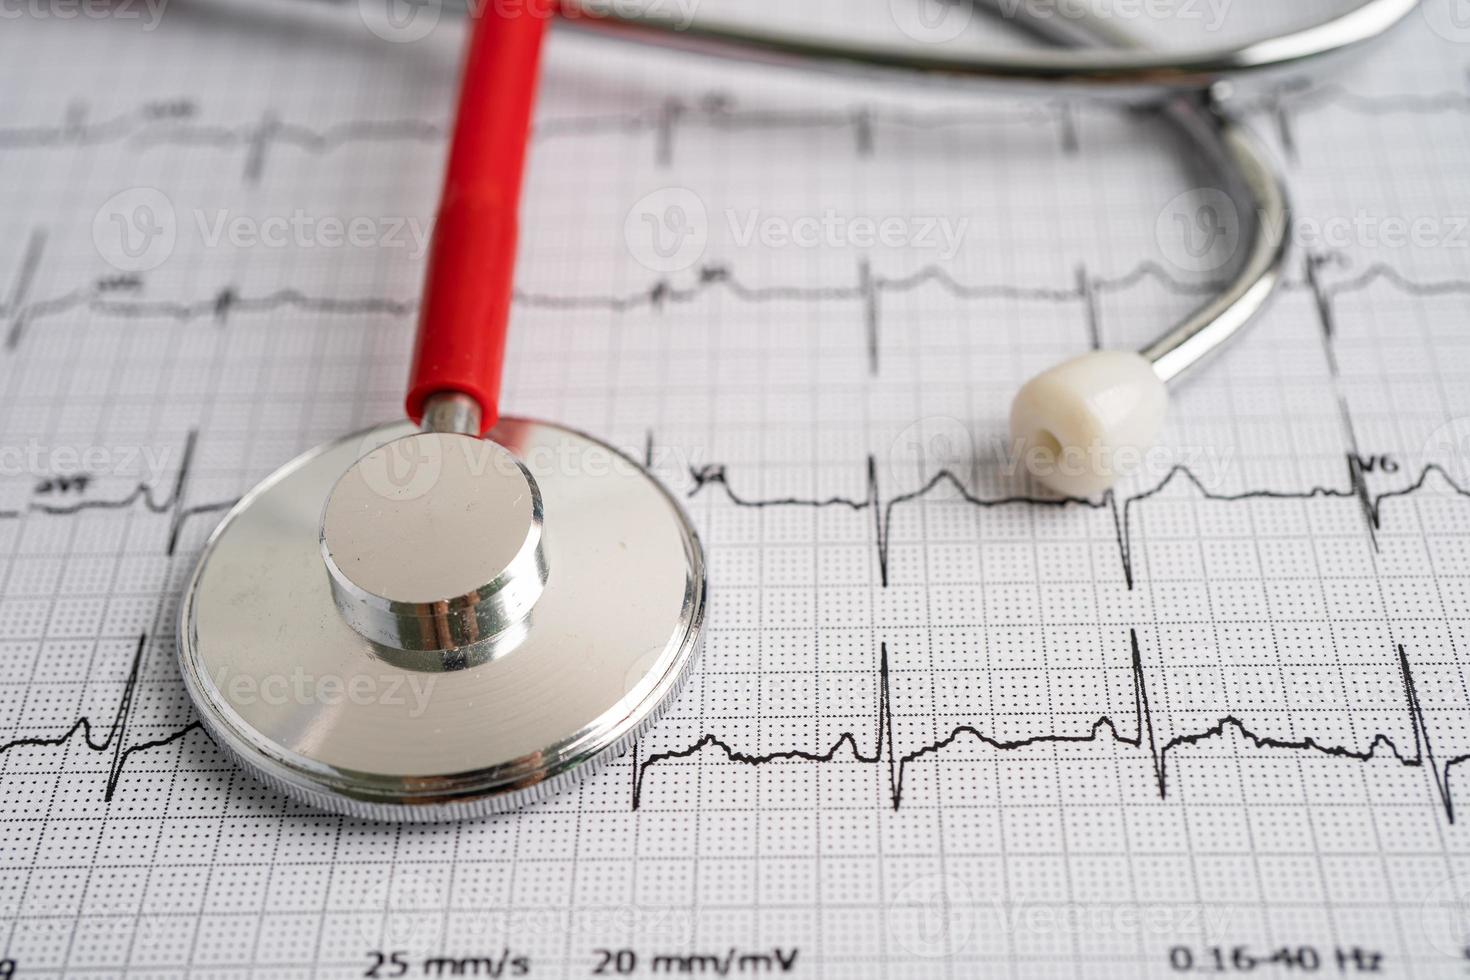 estetoscópio no eletrocardiograma ecg, onda cardíaca, ataque cardíaco, relatório do eletrocardiograma. foto